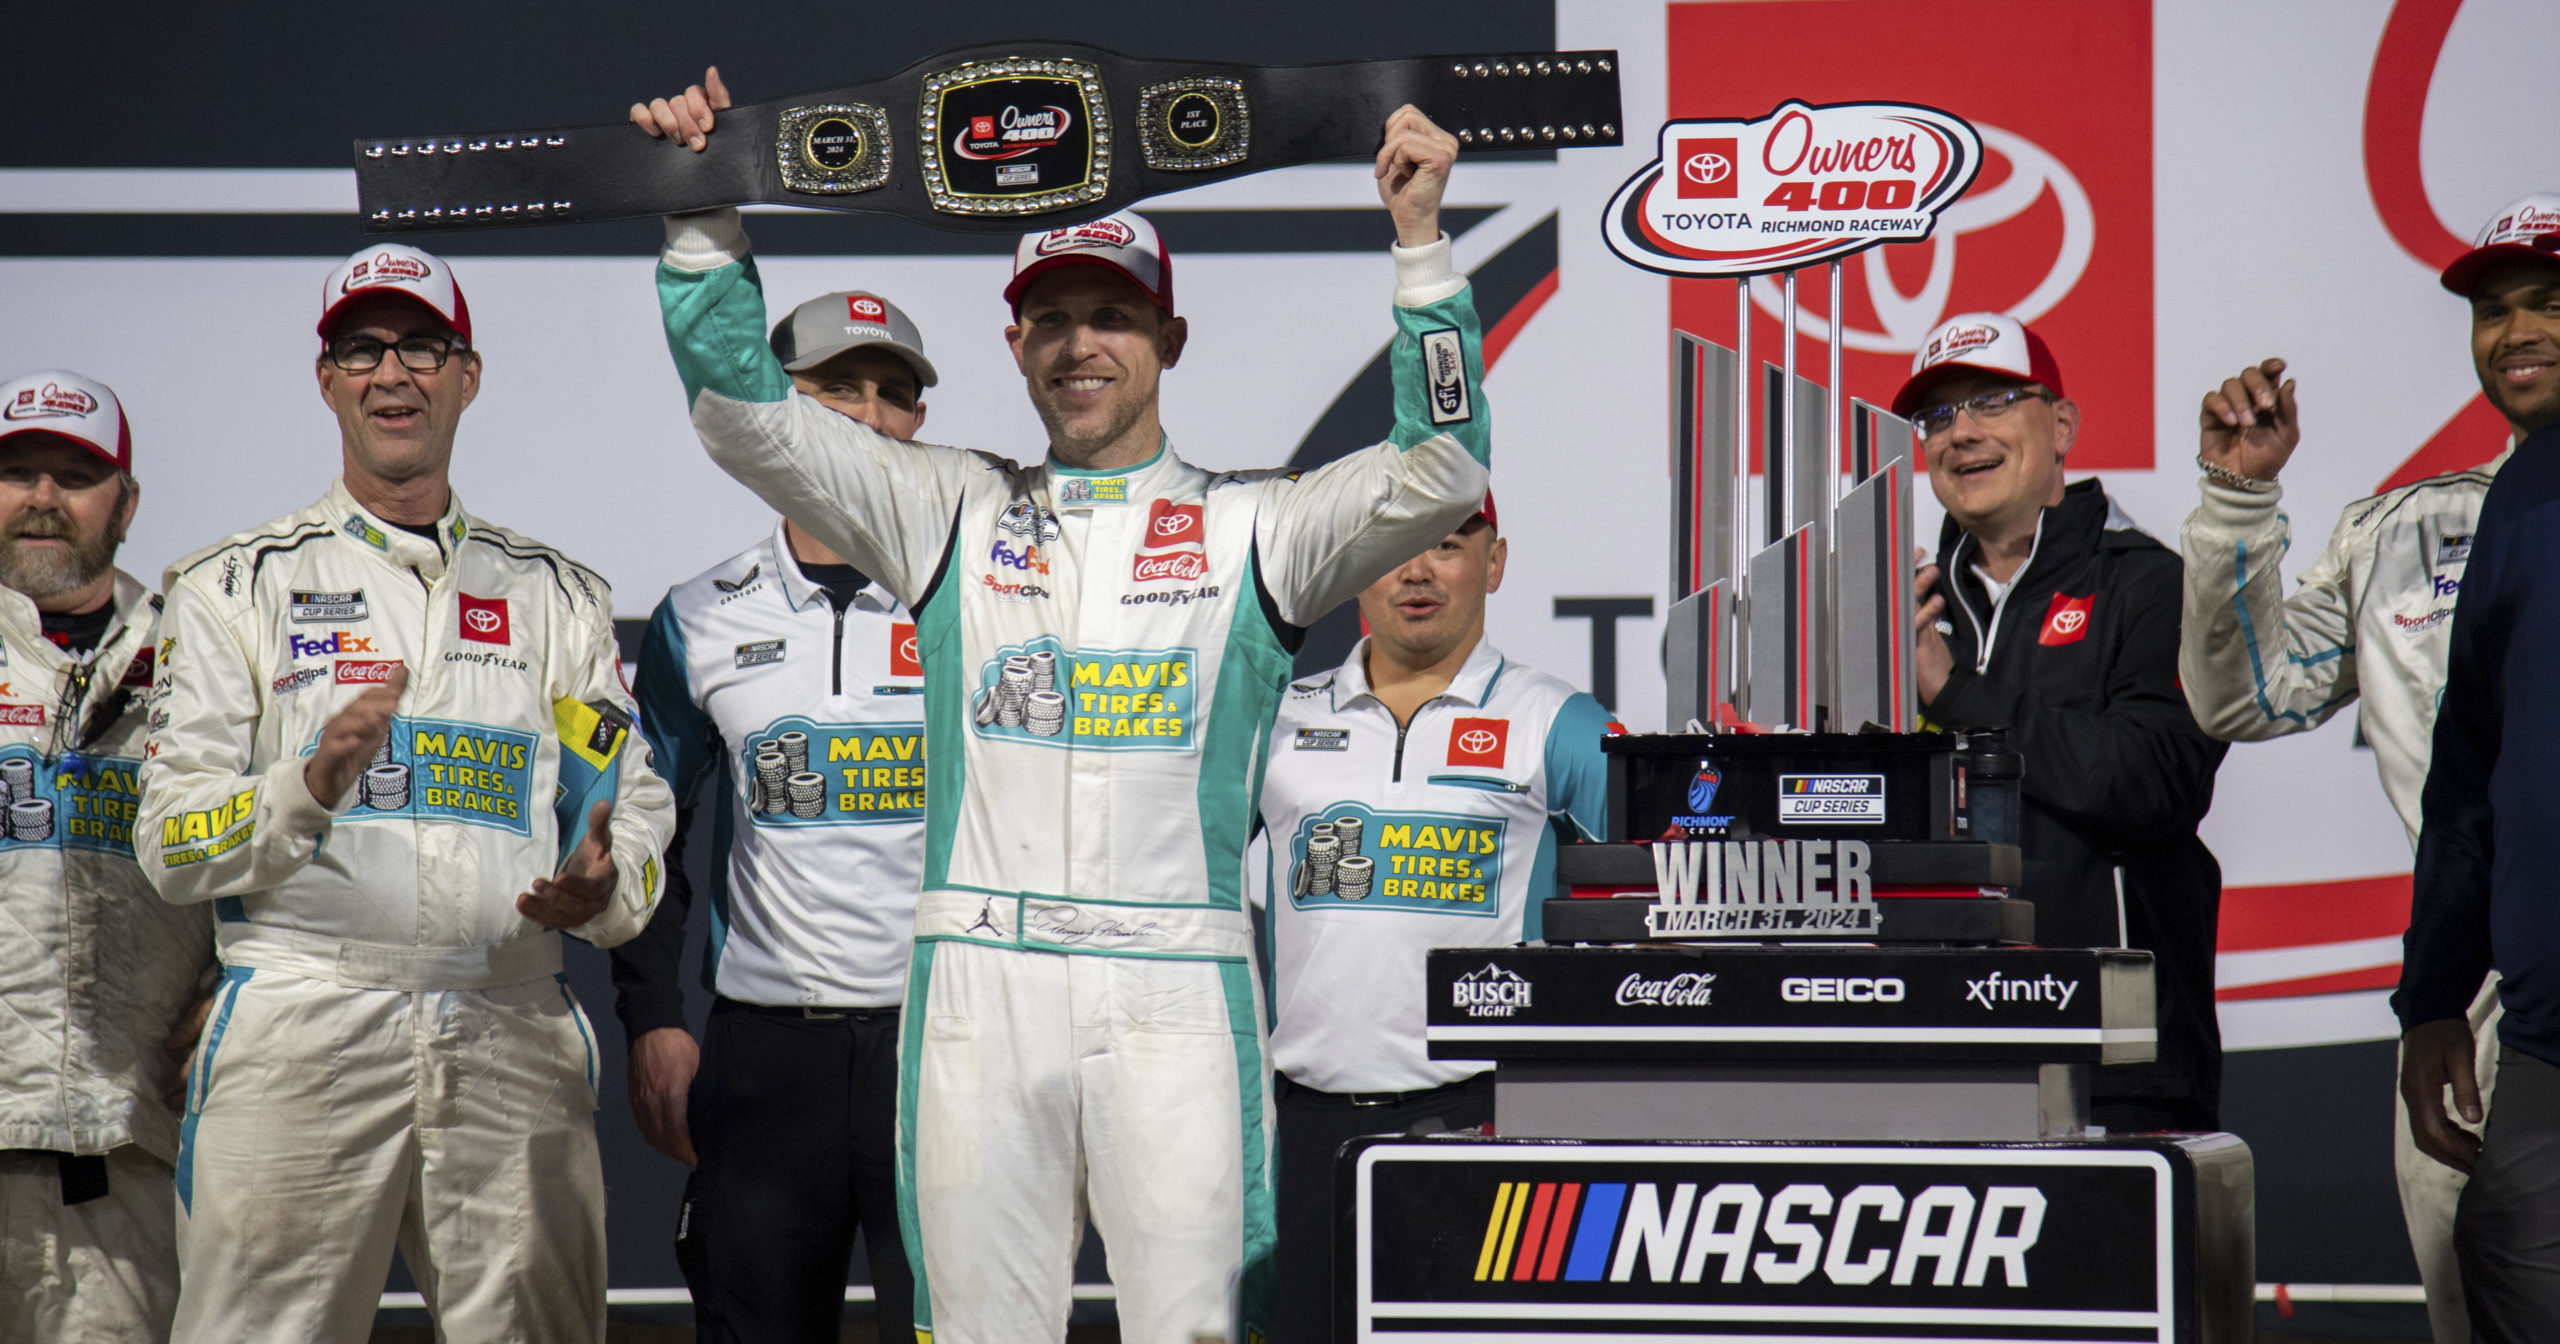 Denny Hamlin celebrates after winning a NASCAR Cup Series race at Richmond Raceway in Richmond, Virginia, on Sunday.